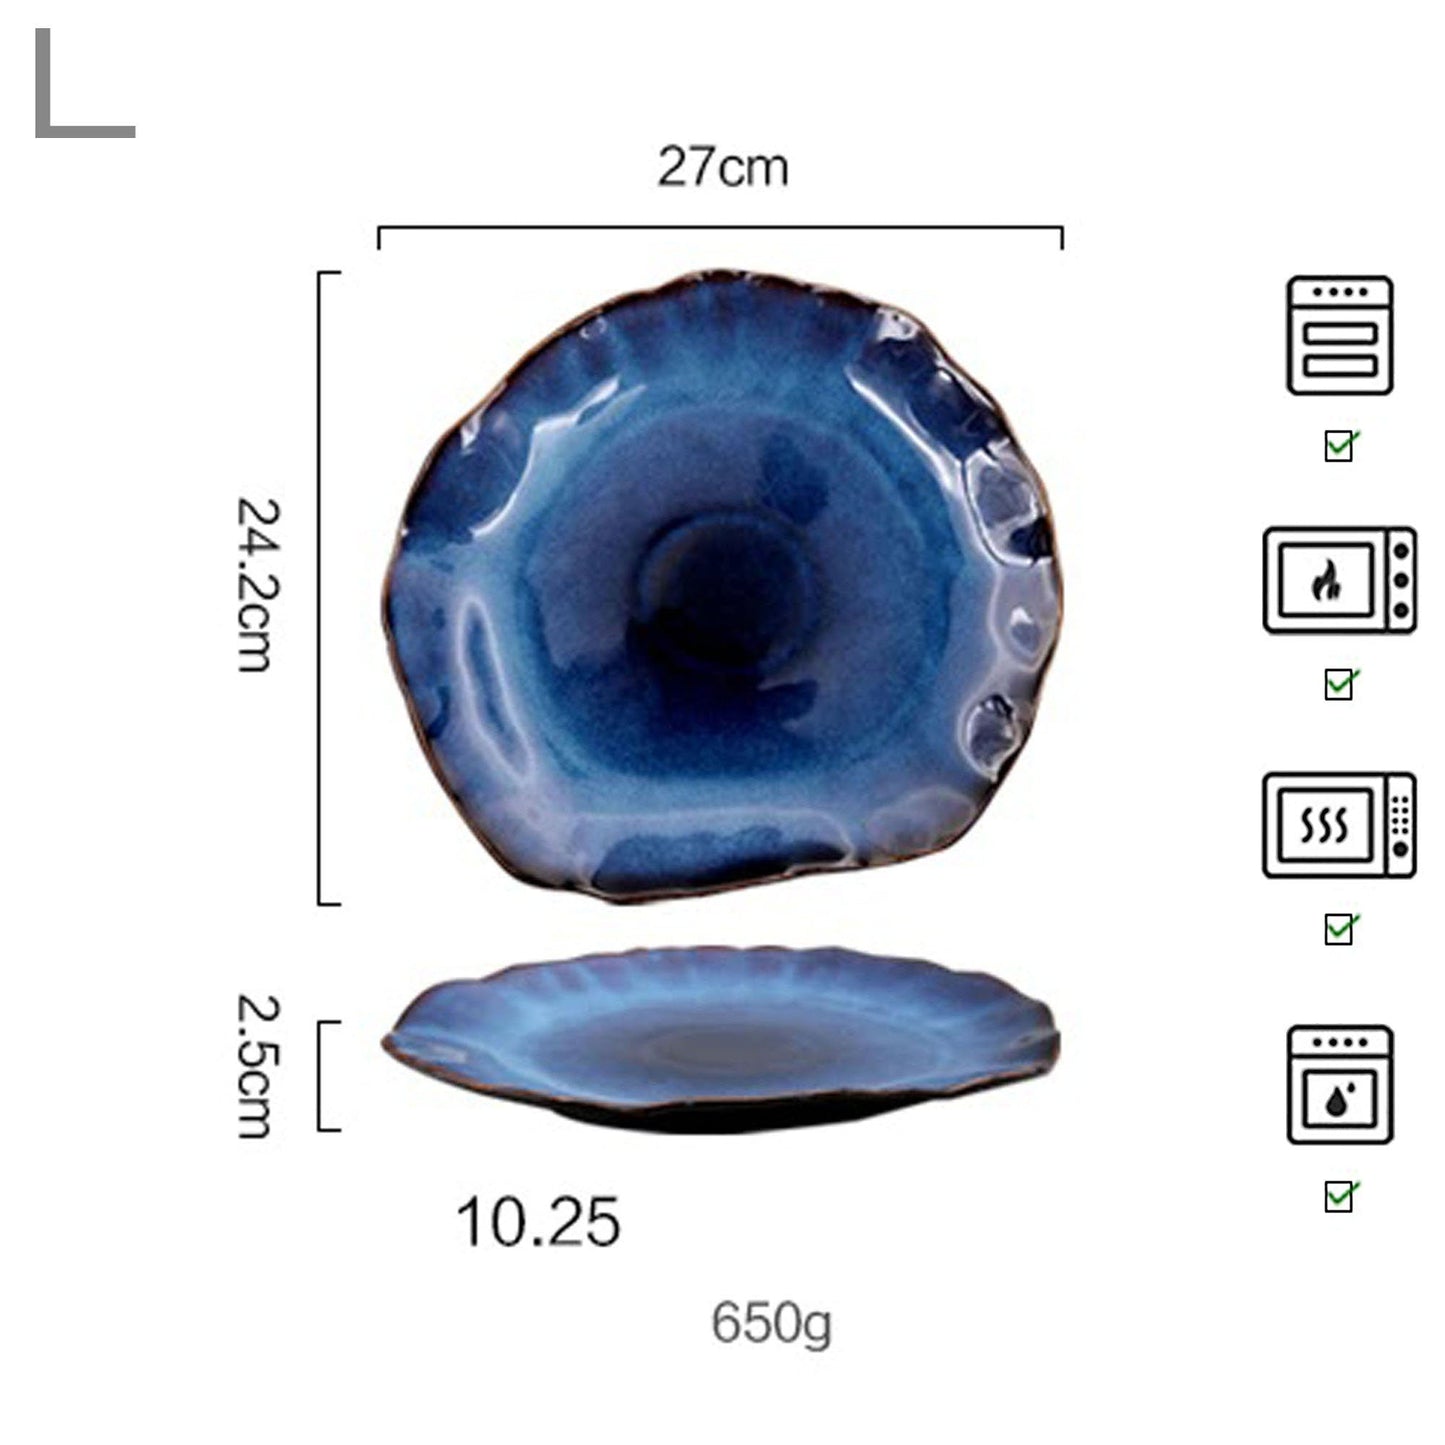 Artfully Shaped Plates & Saucers | Single Piece Blue Colored Ceramic Plates - City2CityWorld